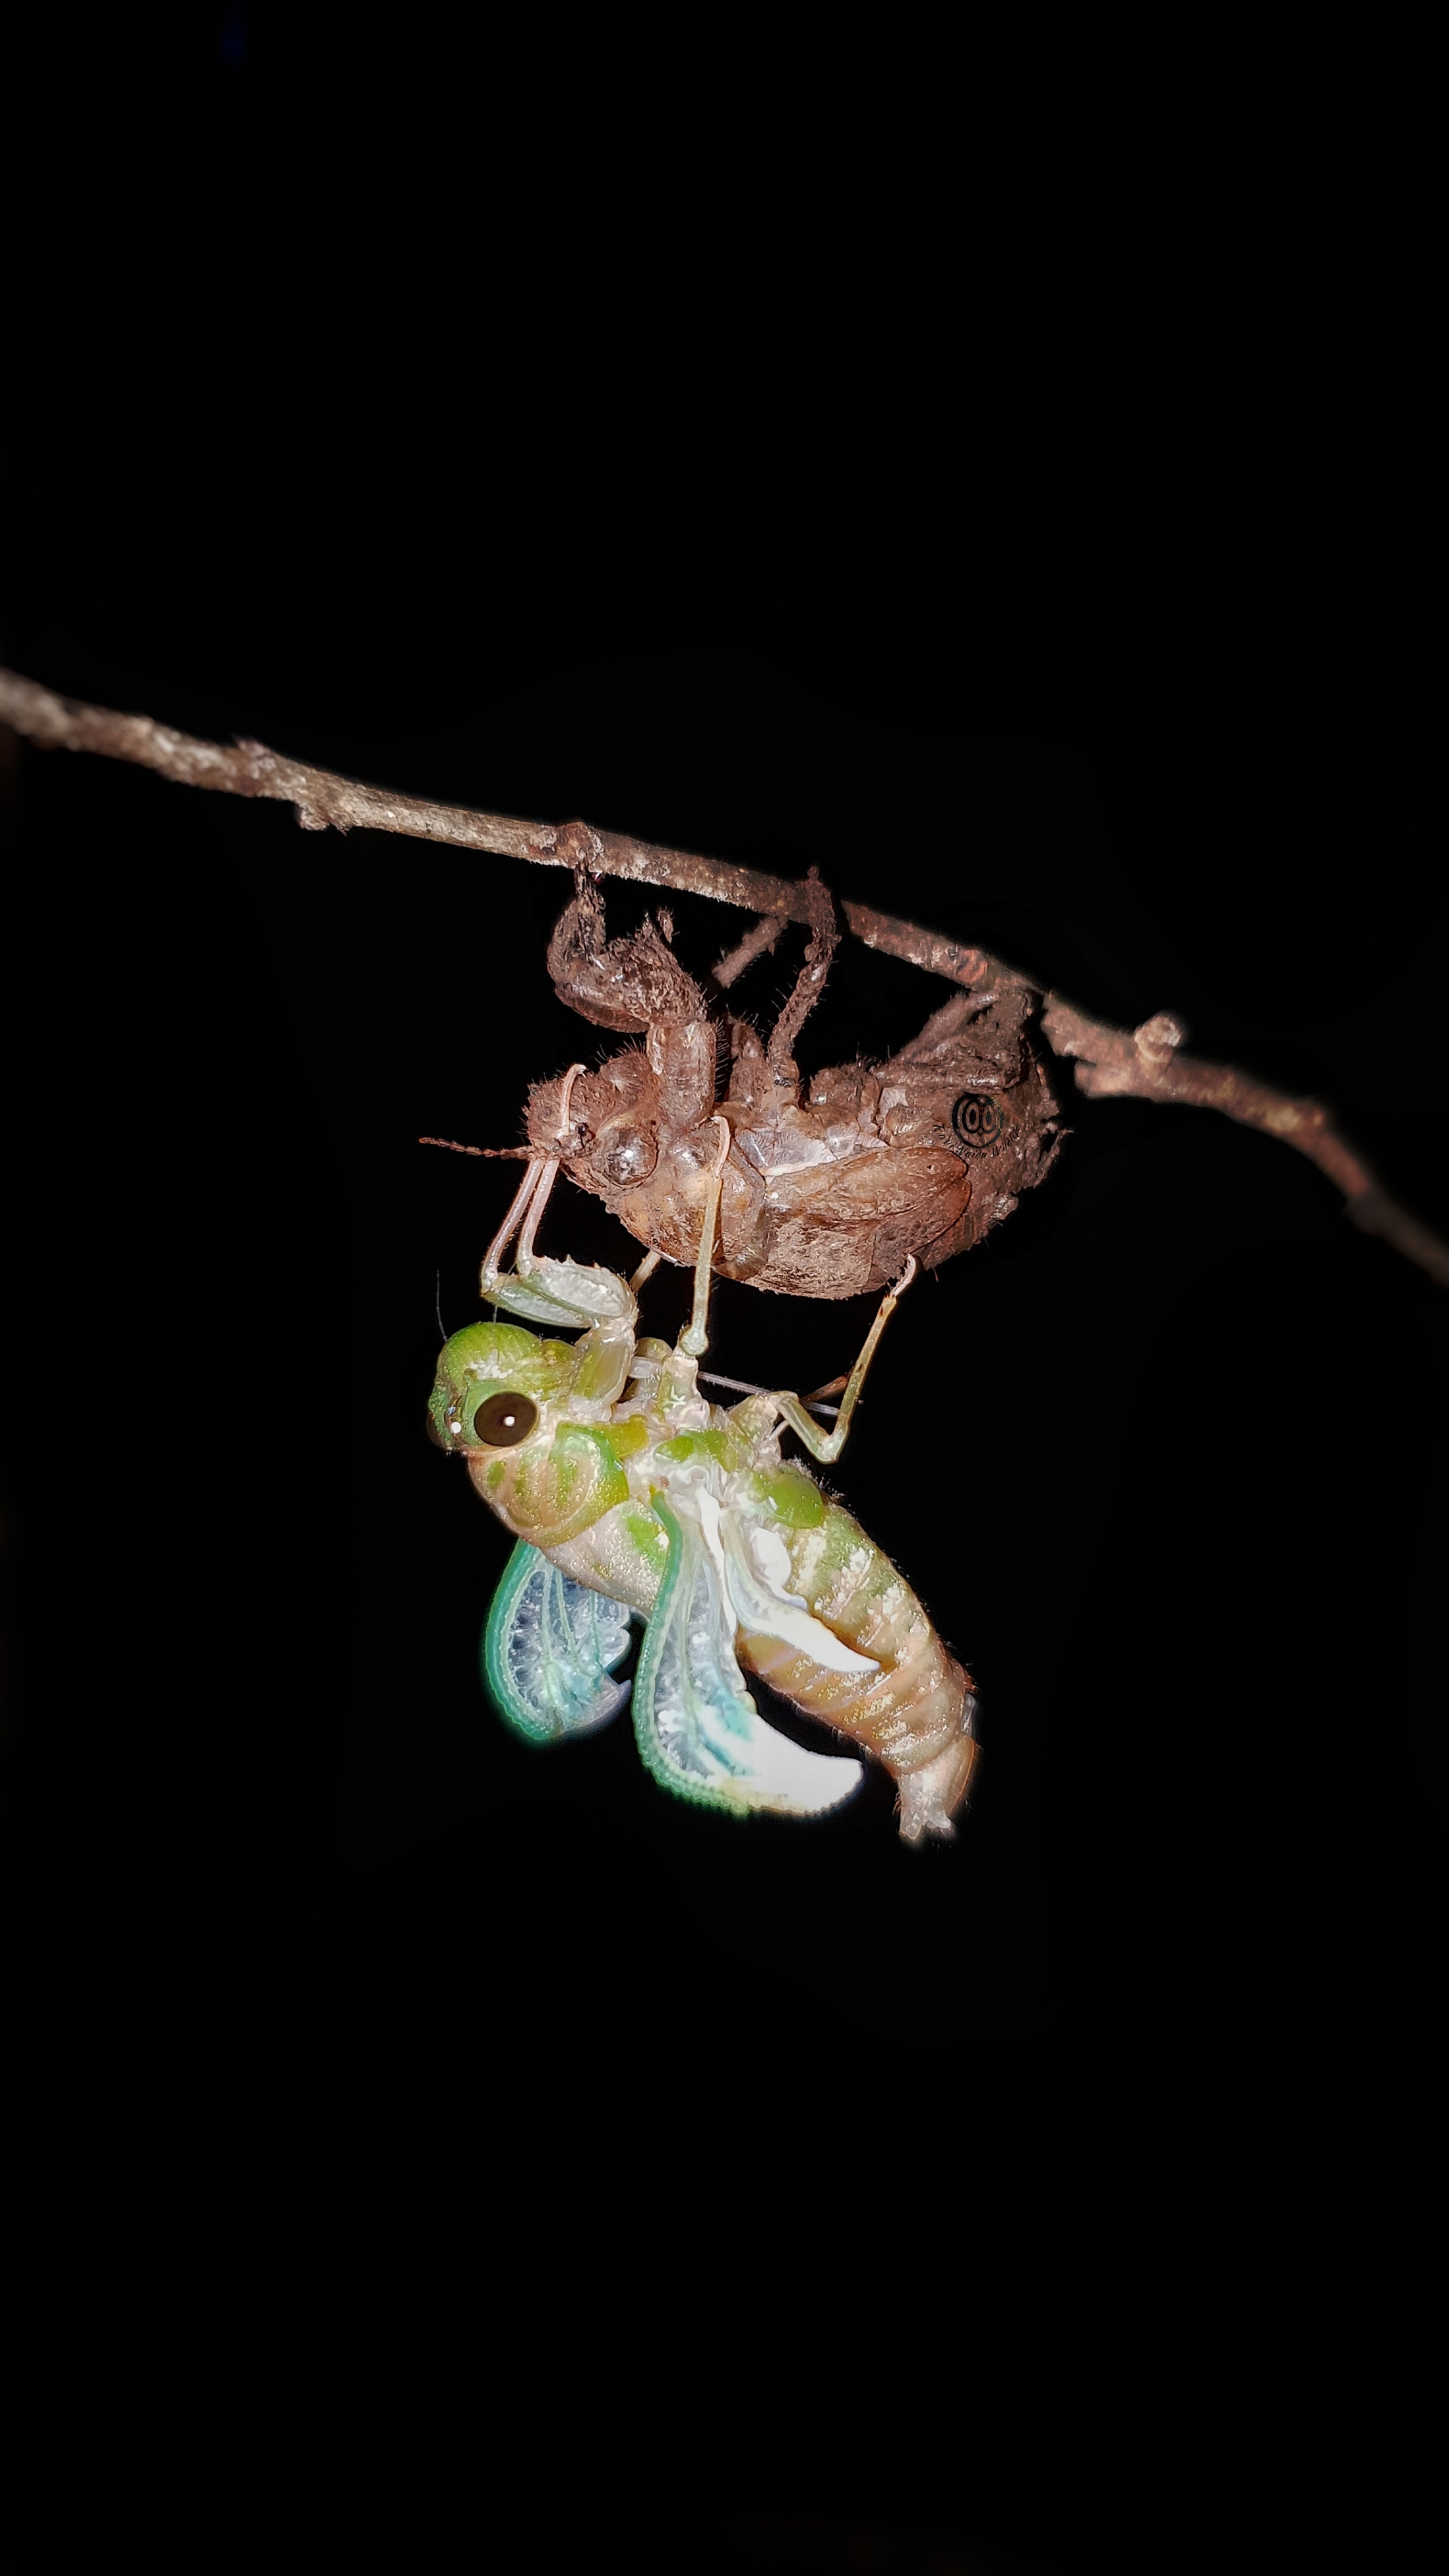 Cicada 